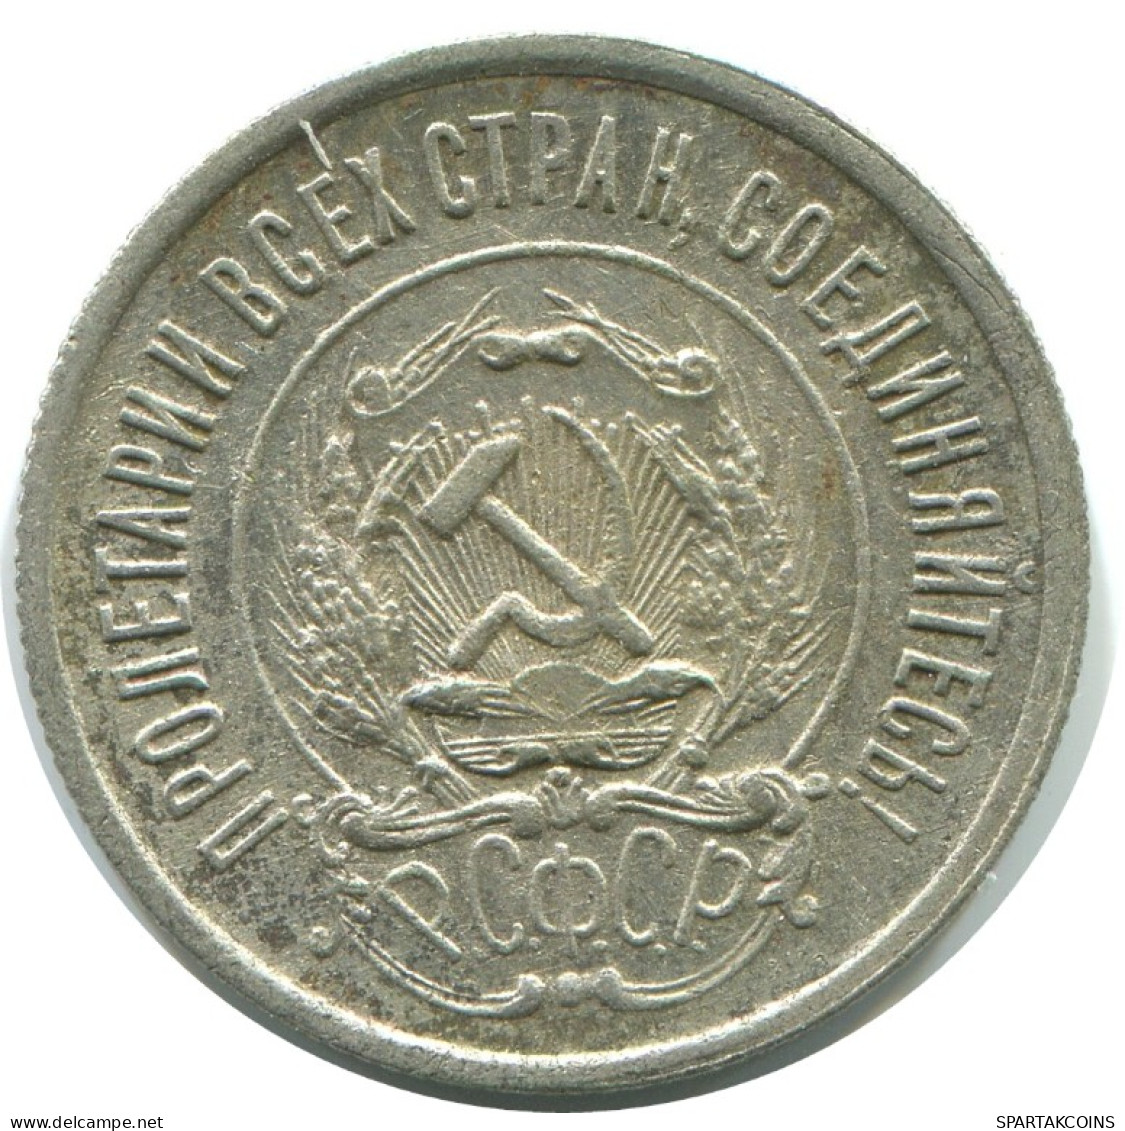 20 KOPEKS 1923 RUSSIA RSFSR SILVER Coin HIGH GRADE #AF496.4.U.A - Russia